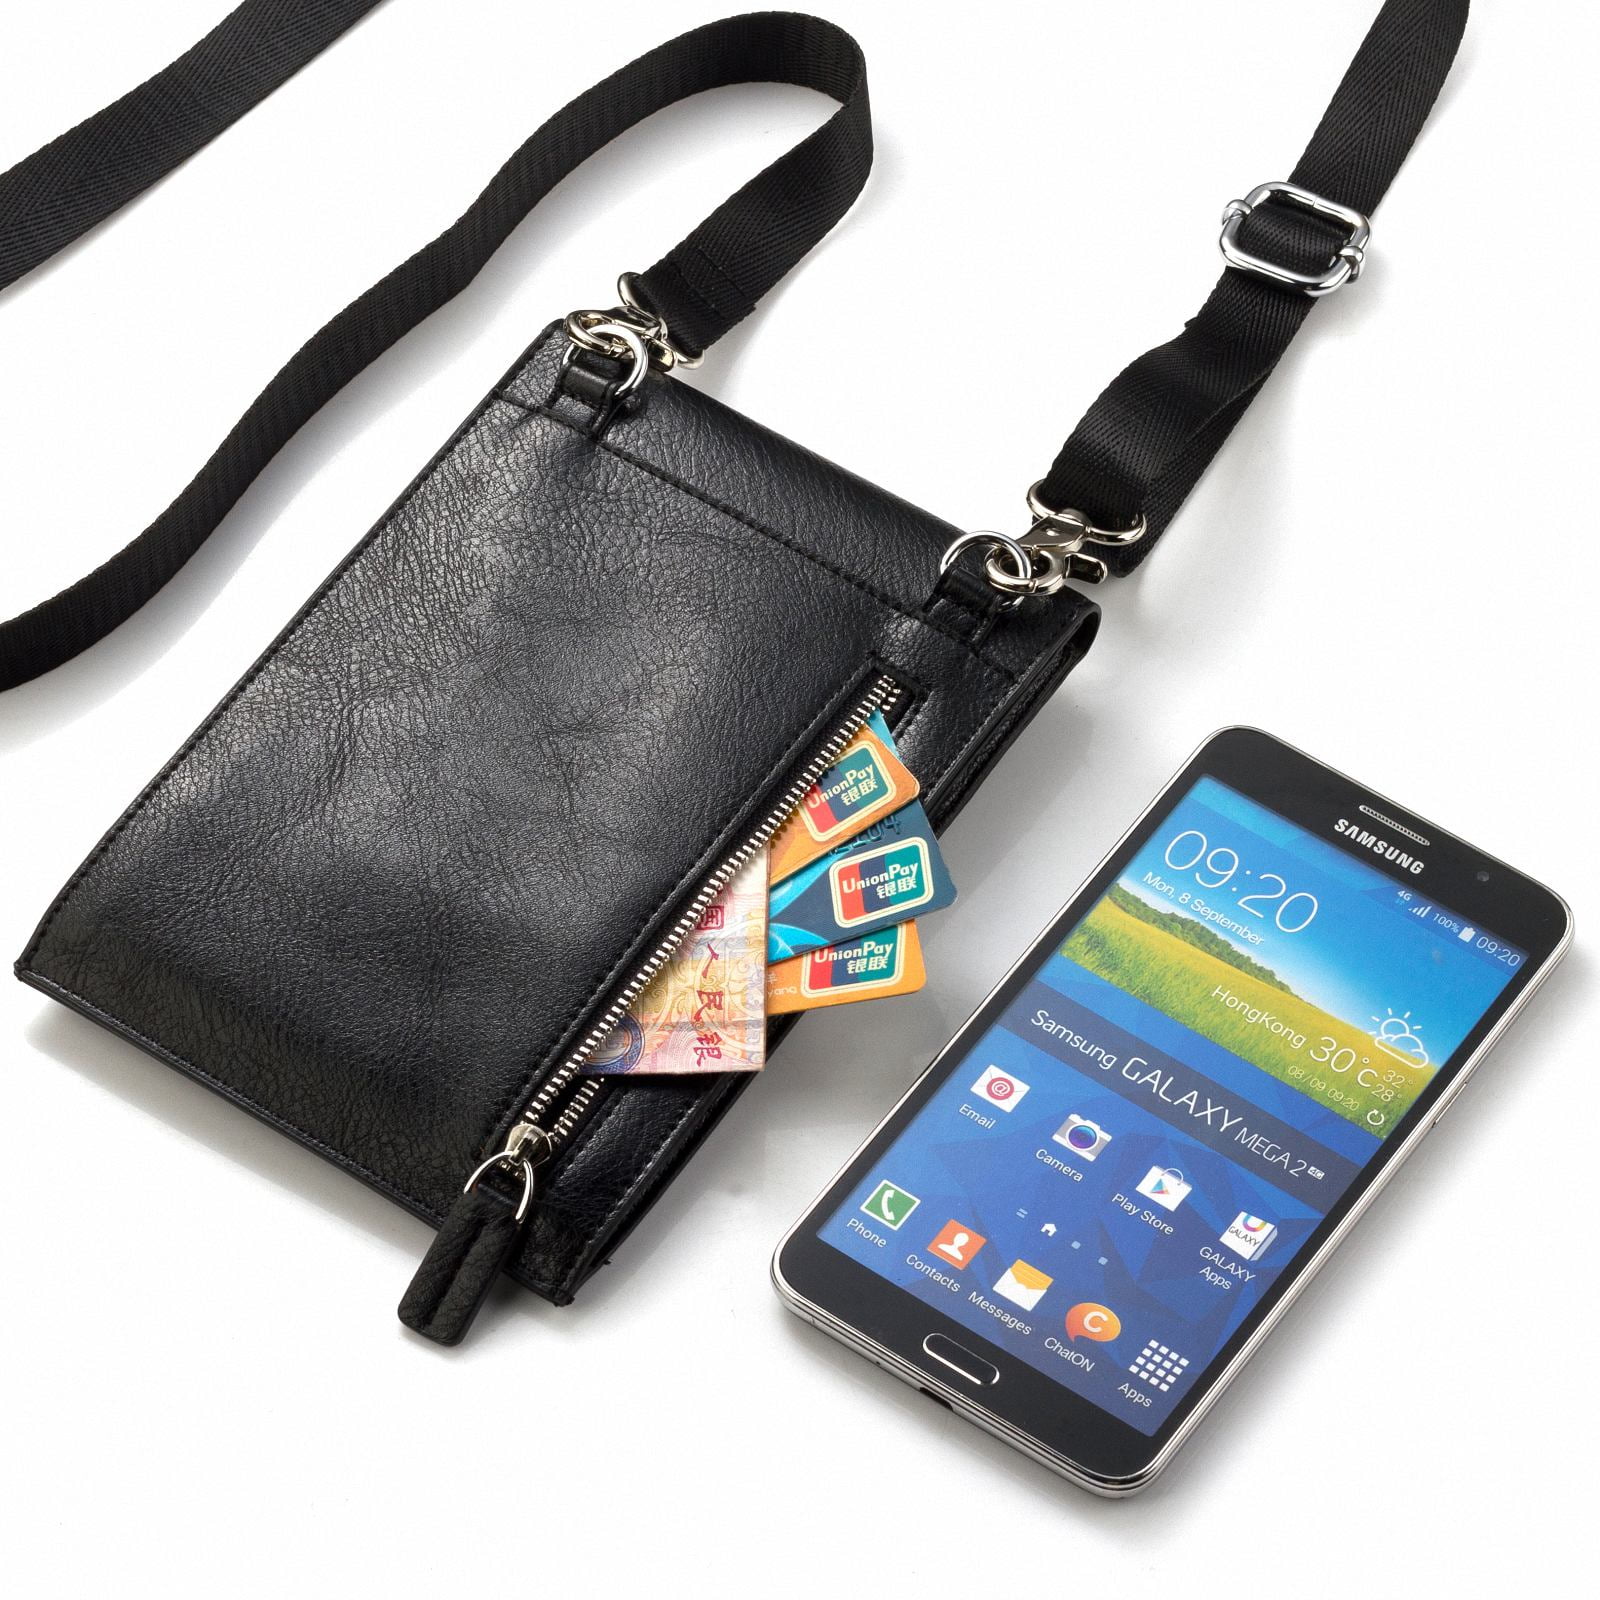 ihreesy Crossbody Shoulder Bag,Multi Compartment Phone Purse Bag with  Adjustable Shoulder Strap Purse